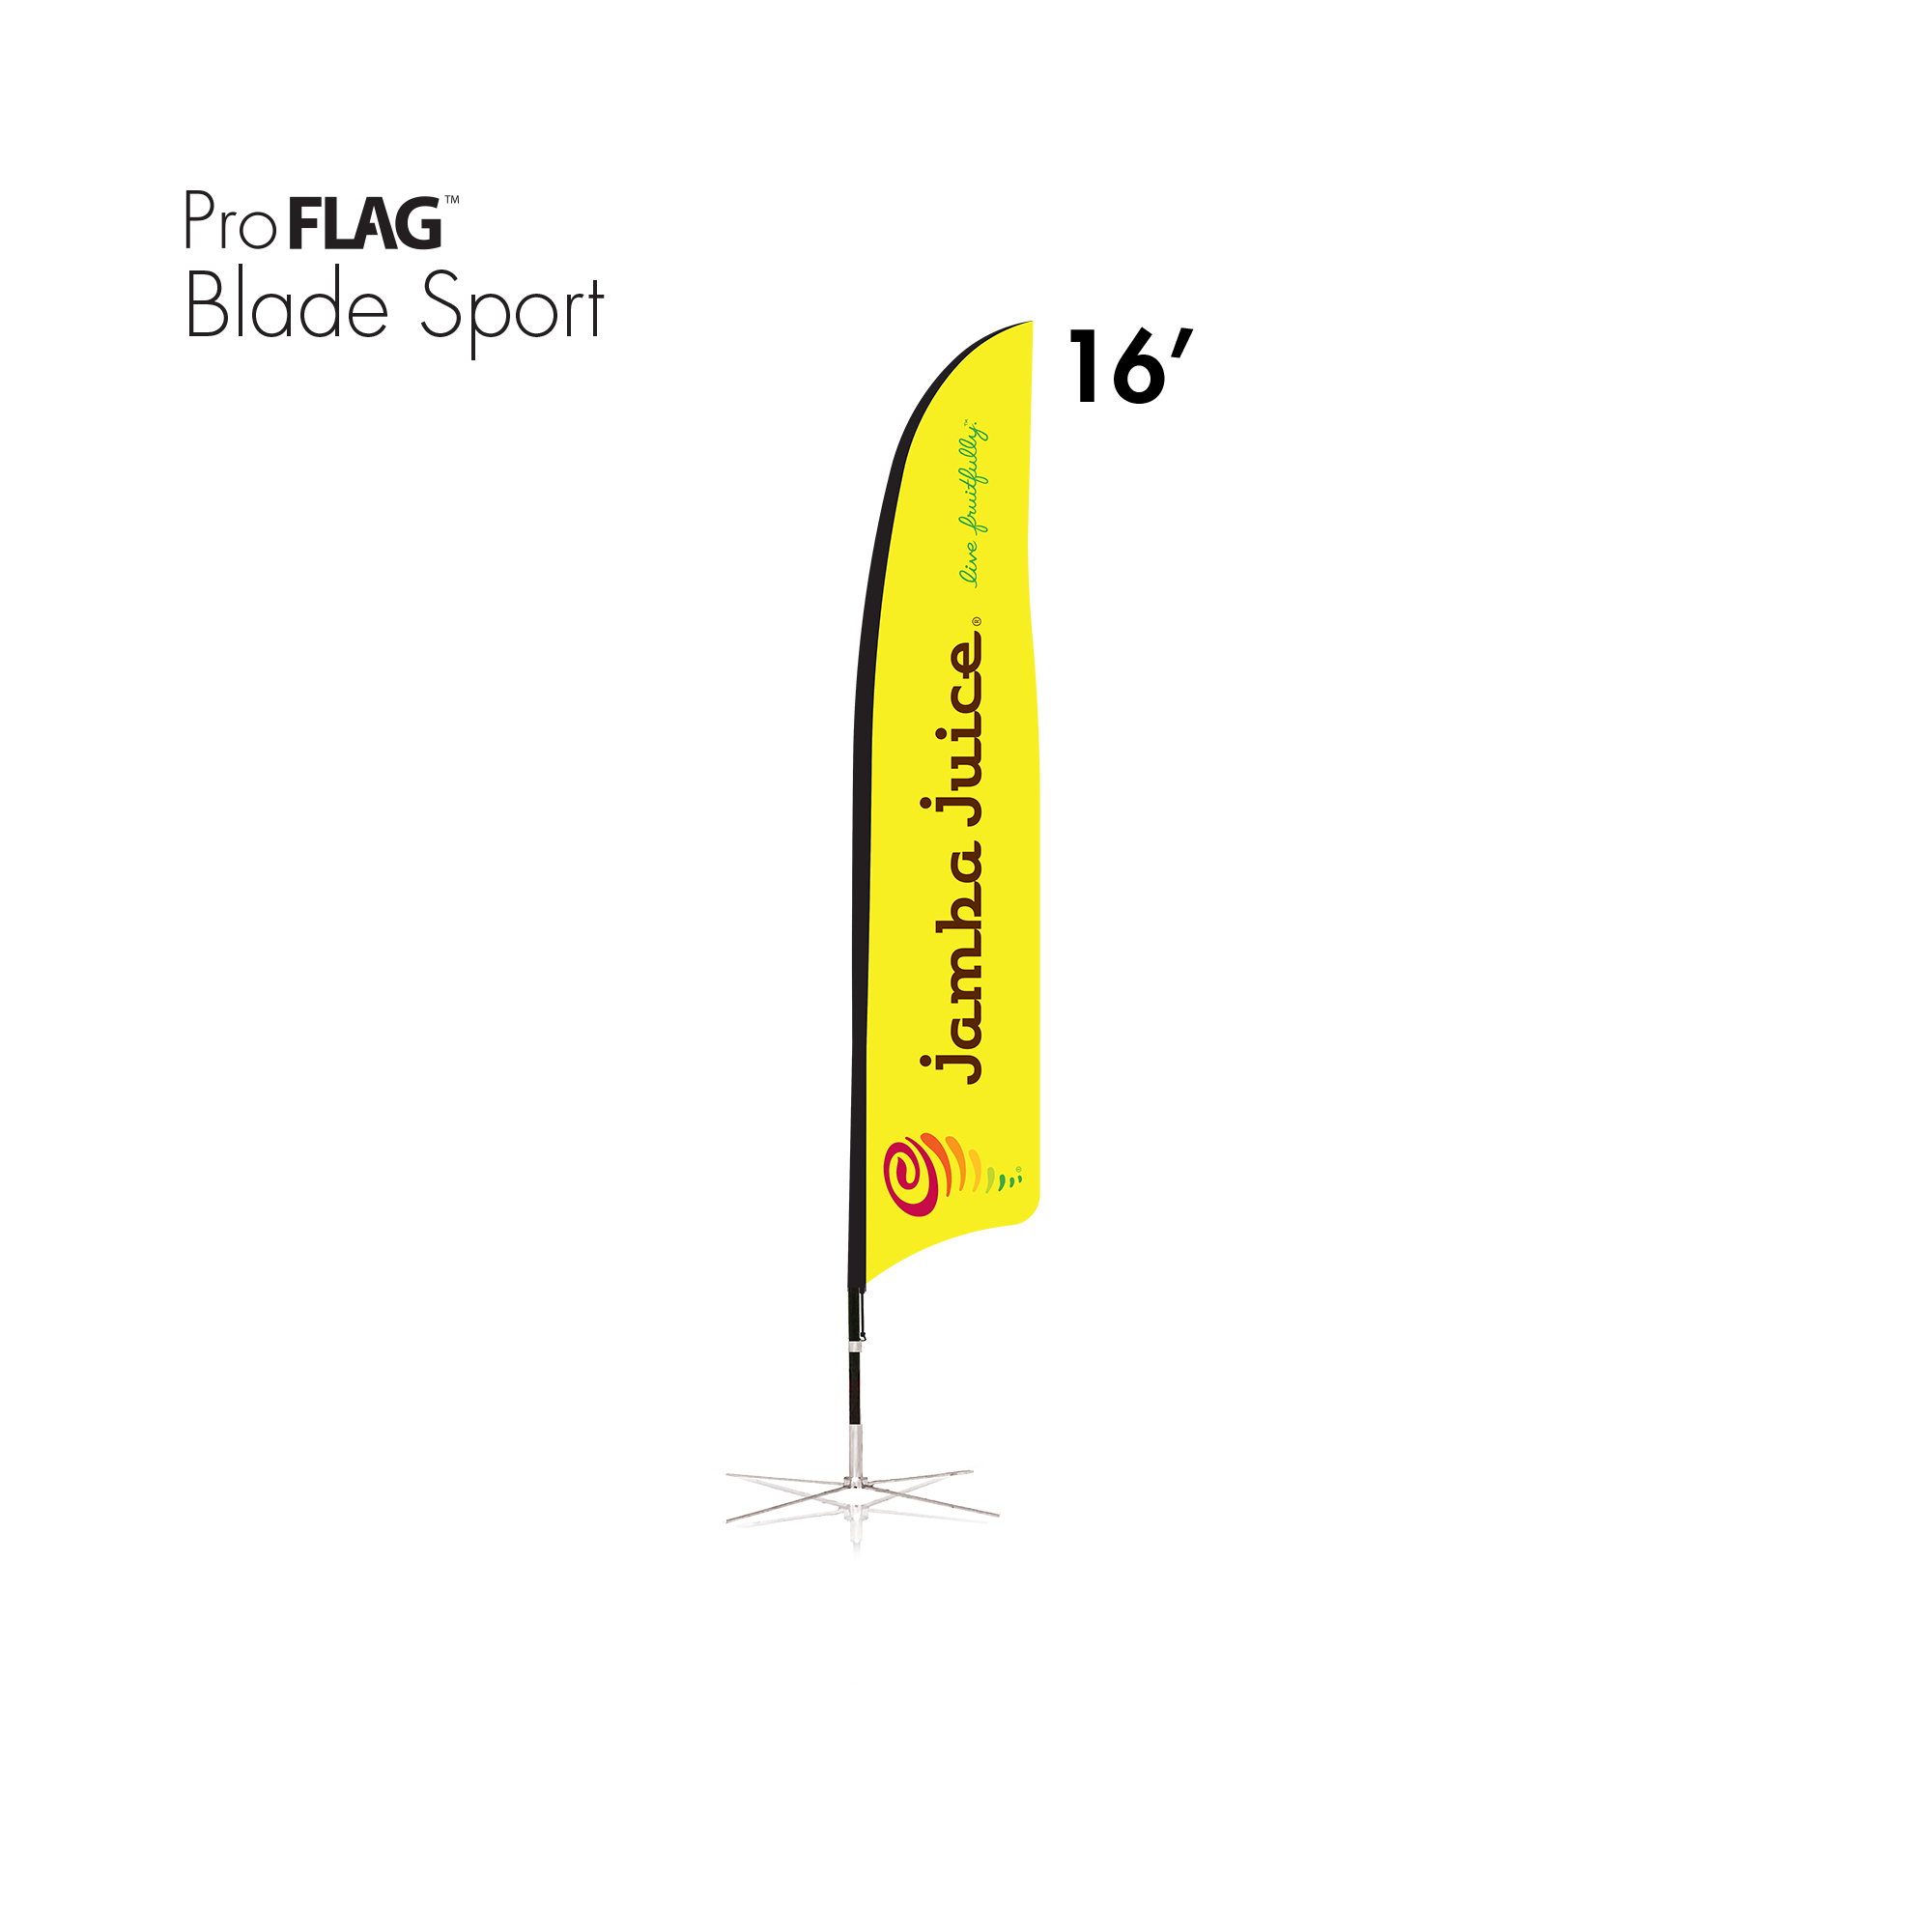 Blade Sport Flag